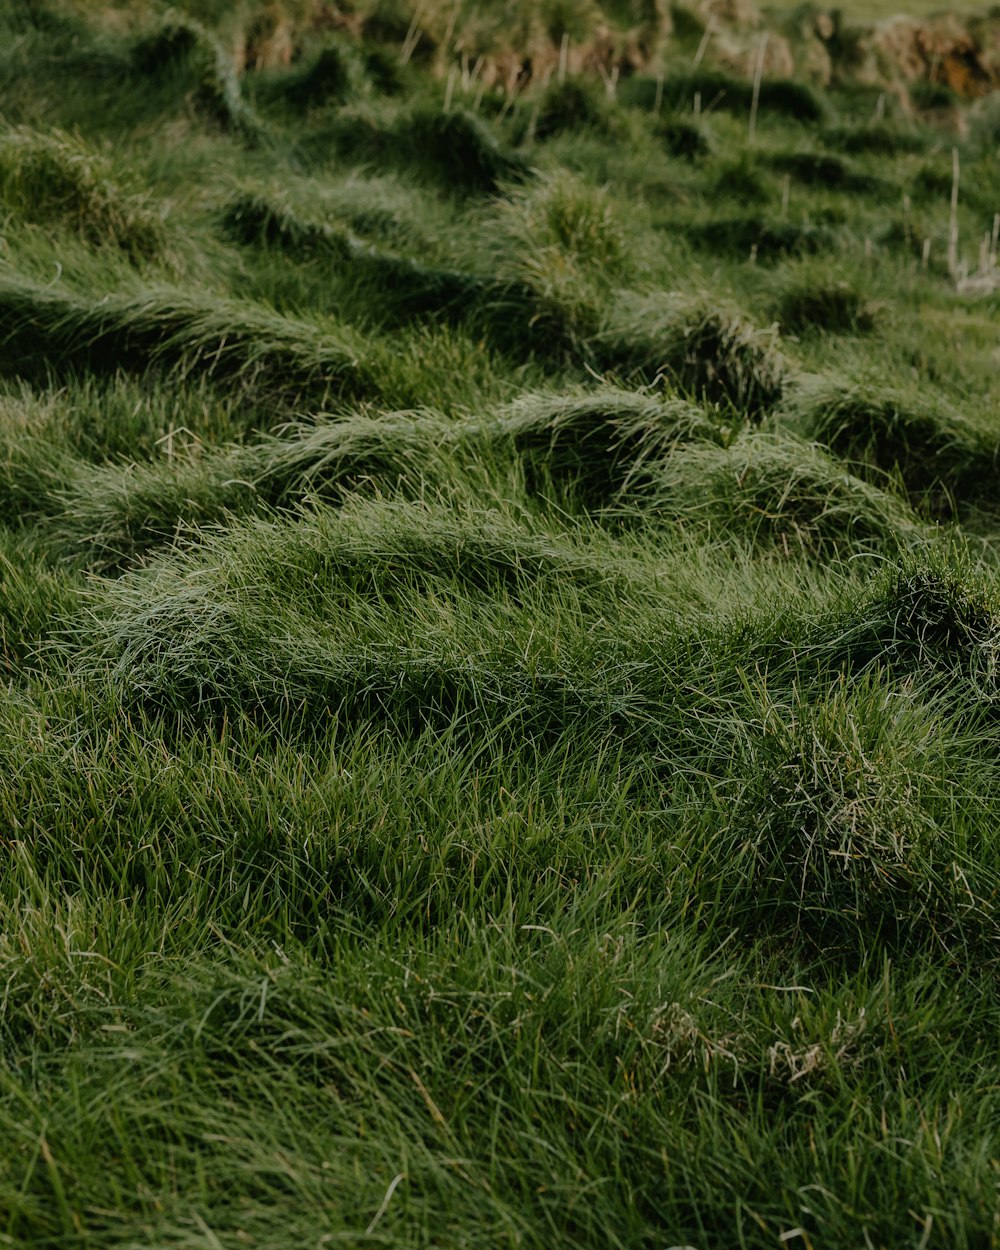 a sheep standing in a field of green grass